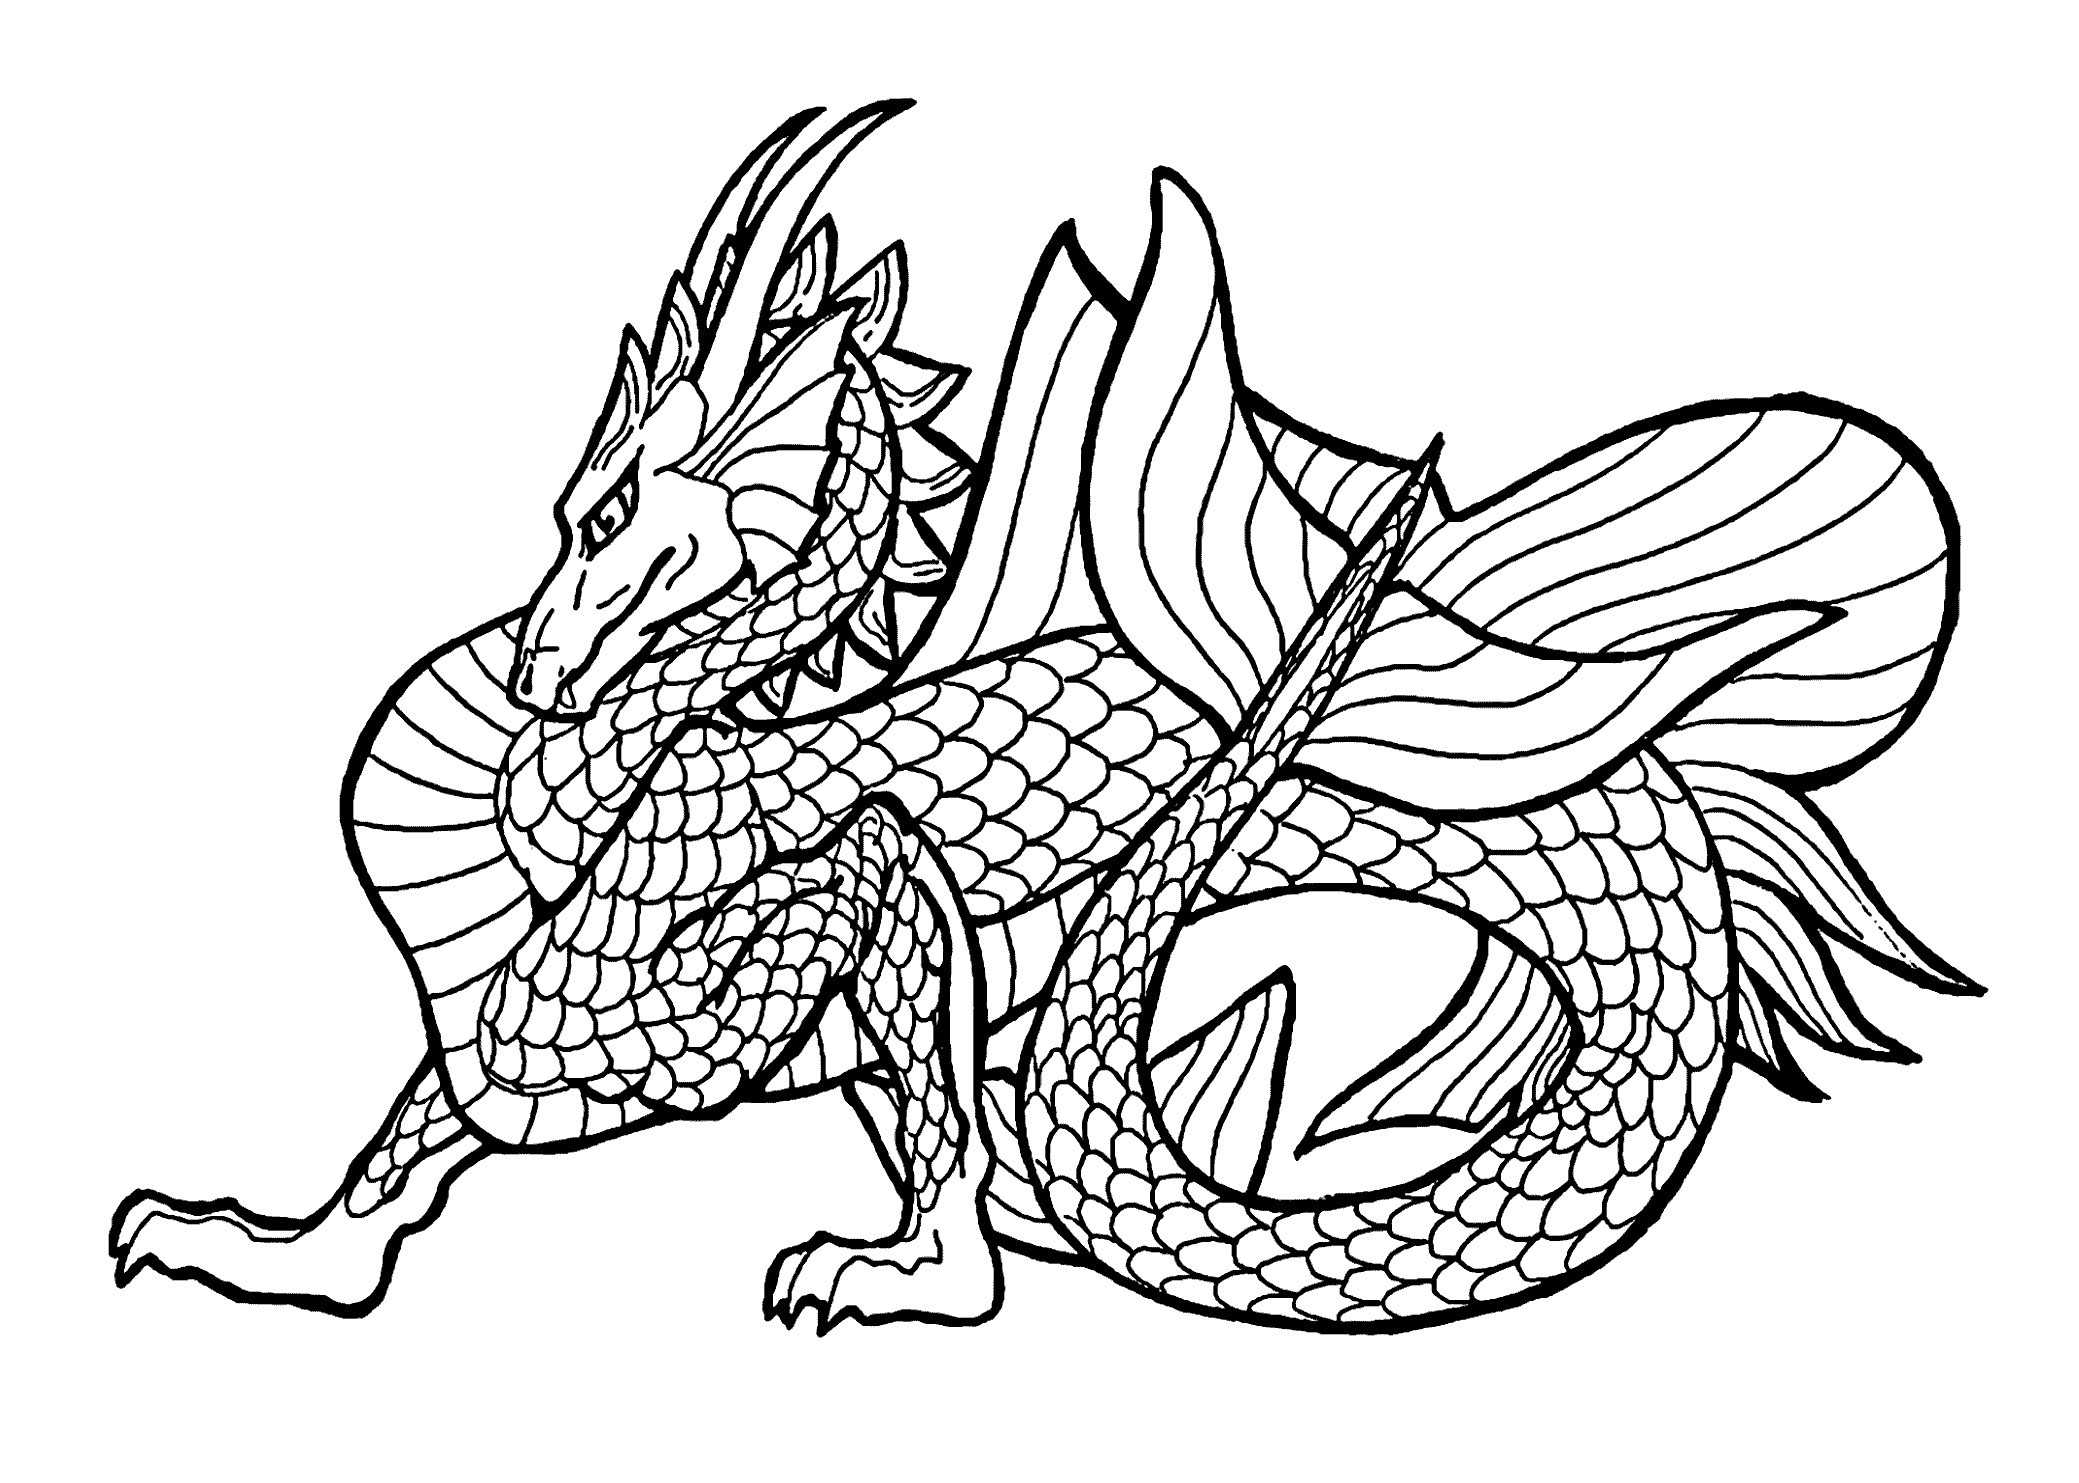 Ninjago dragon coloring pages for kids printable free Color Boy Stuff Pinterest